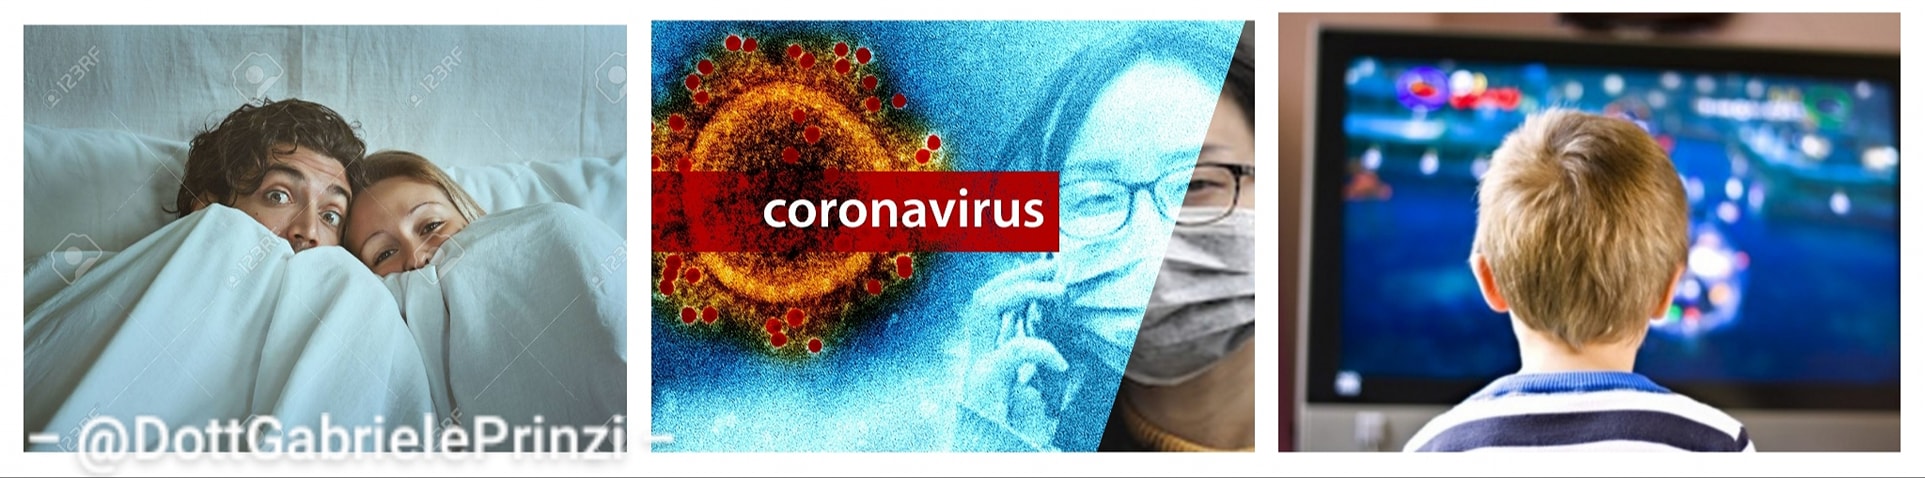 La paura ai tempi del coronavirus.